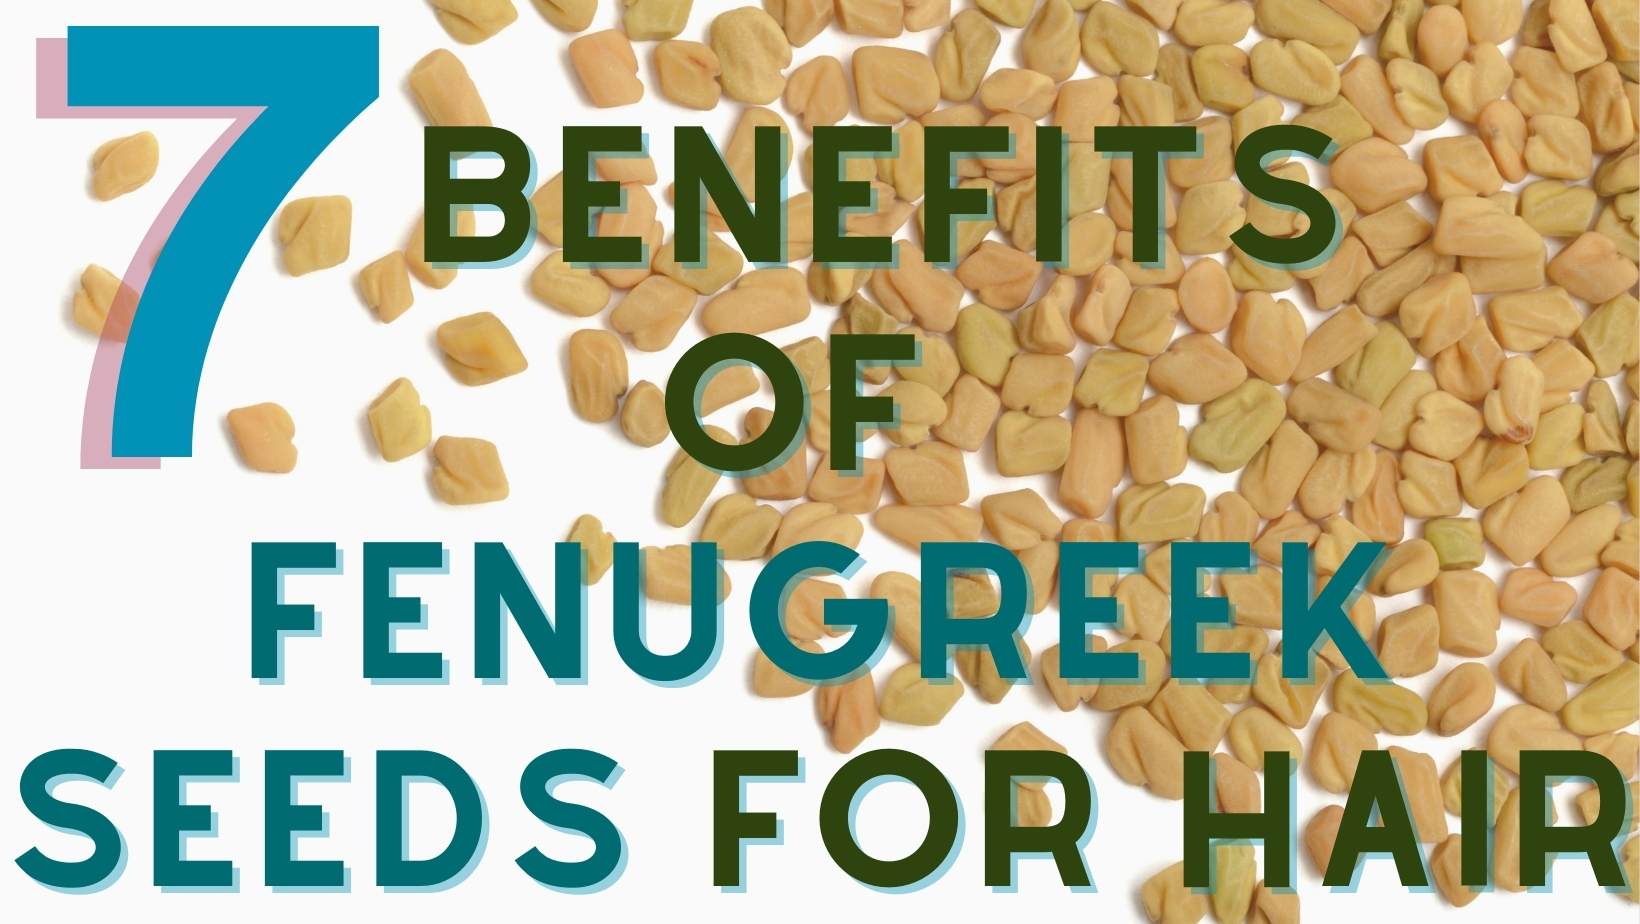 7 Benefits of Fenugreek Seeds(Methi) for Hair - Masala Monk Fenugreek